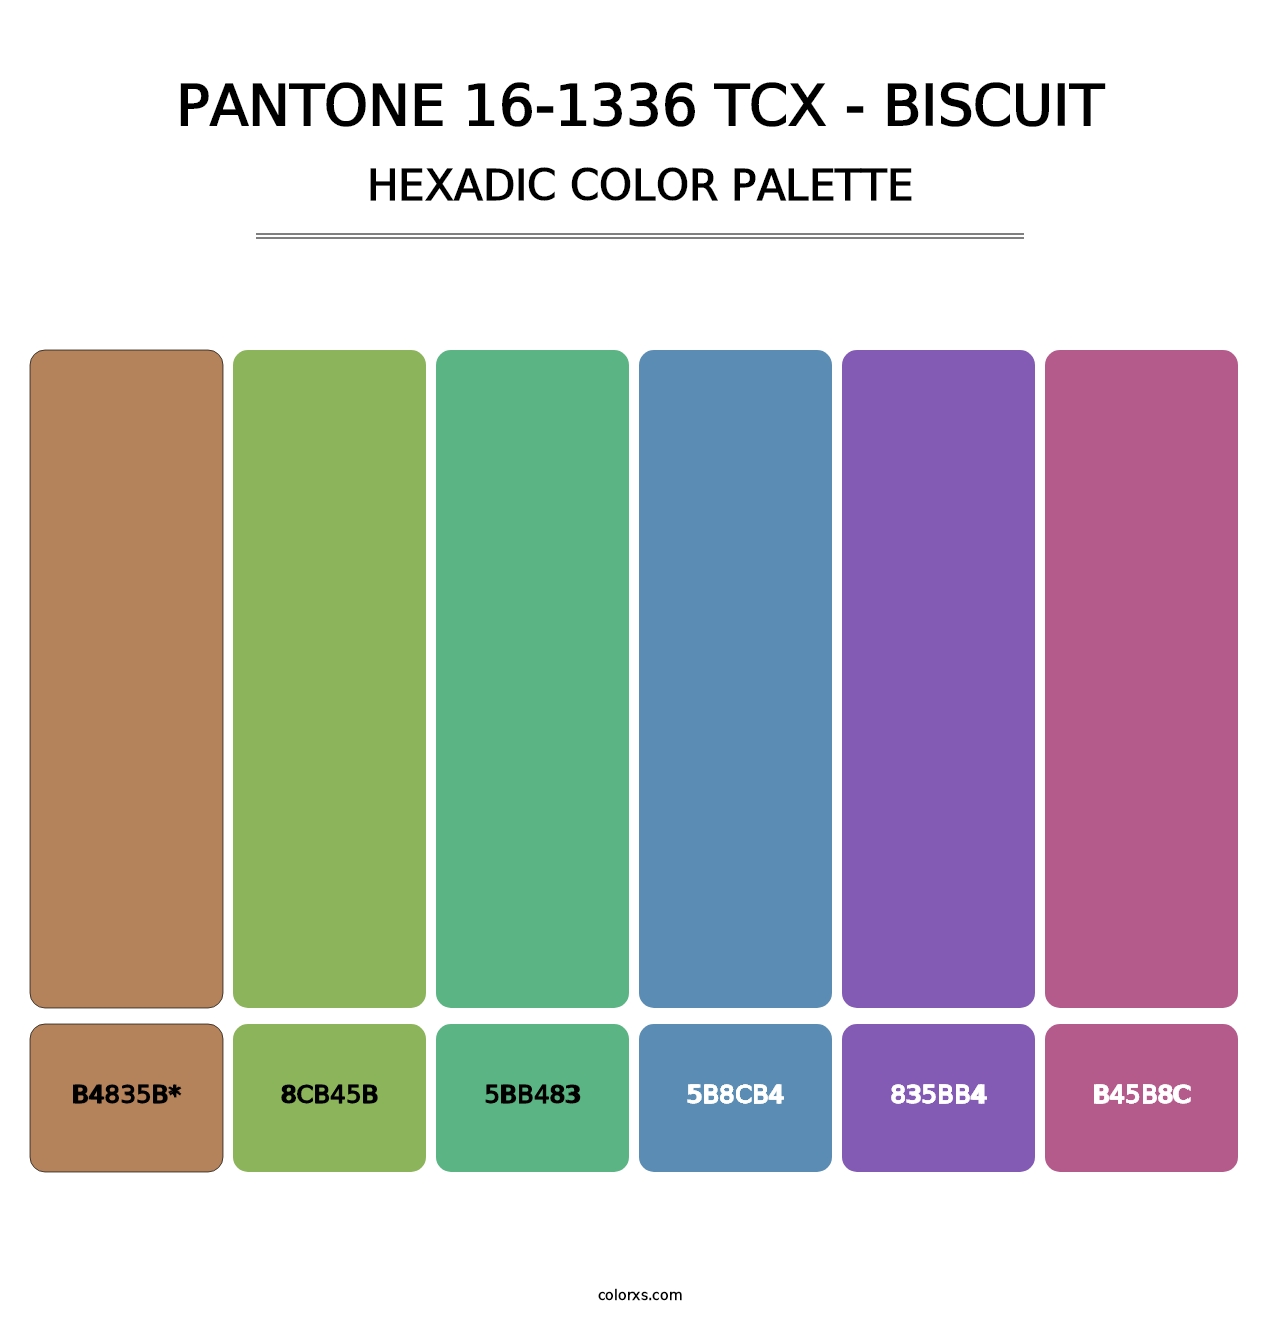 PANTONE 16-1336 TCX - Biscuit - Hexadic Color Palette